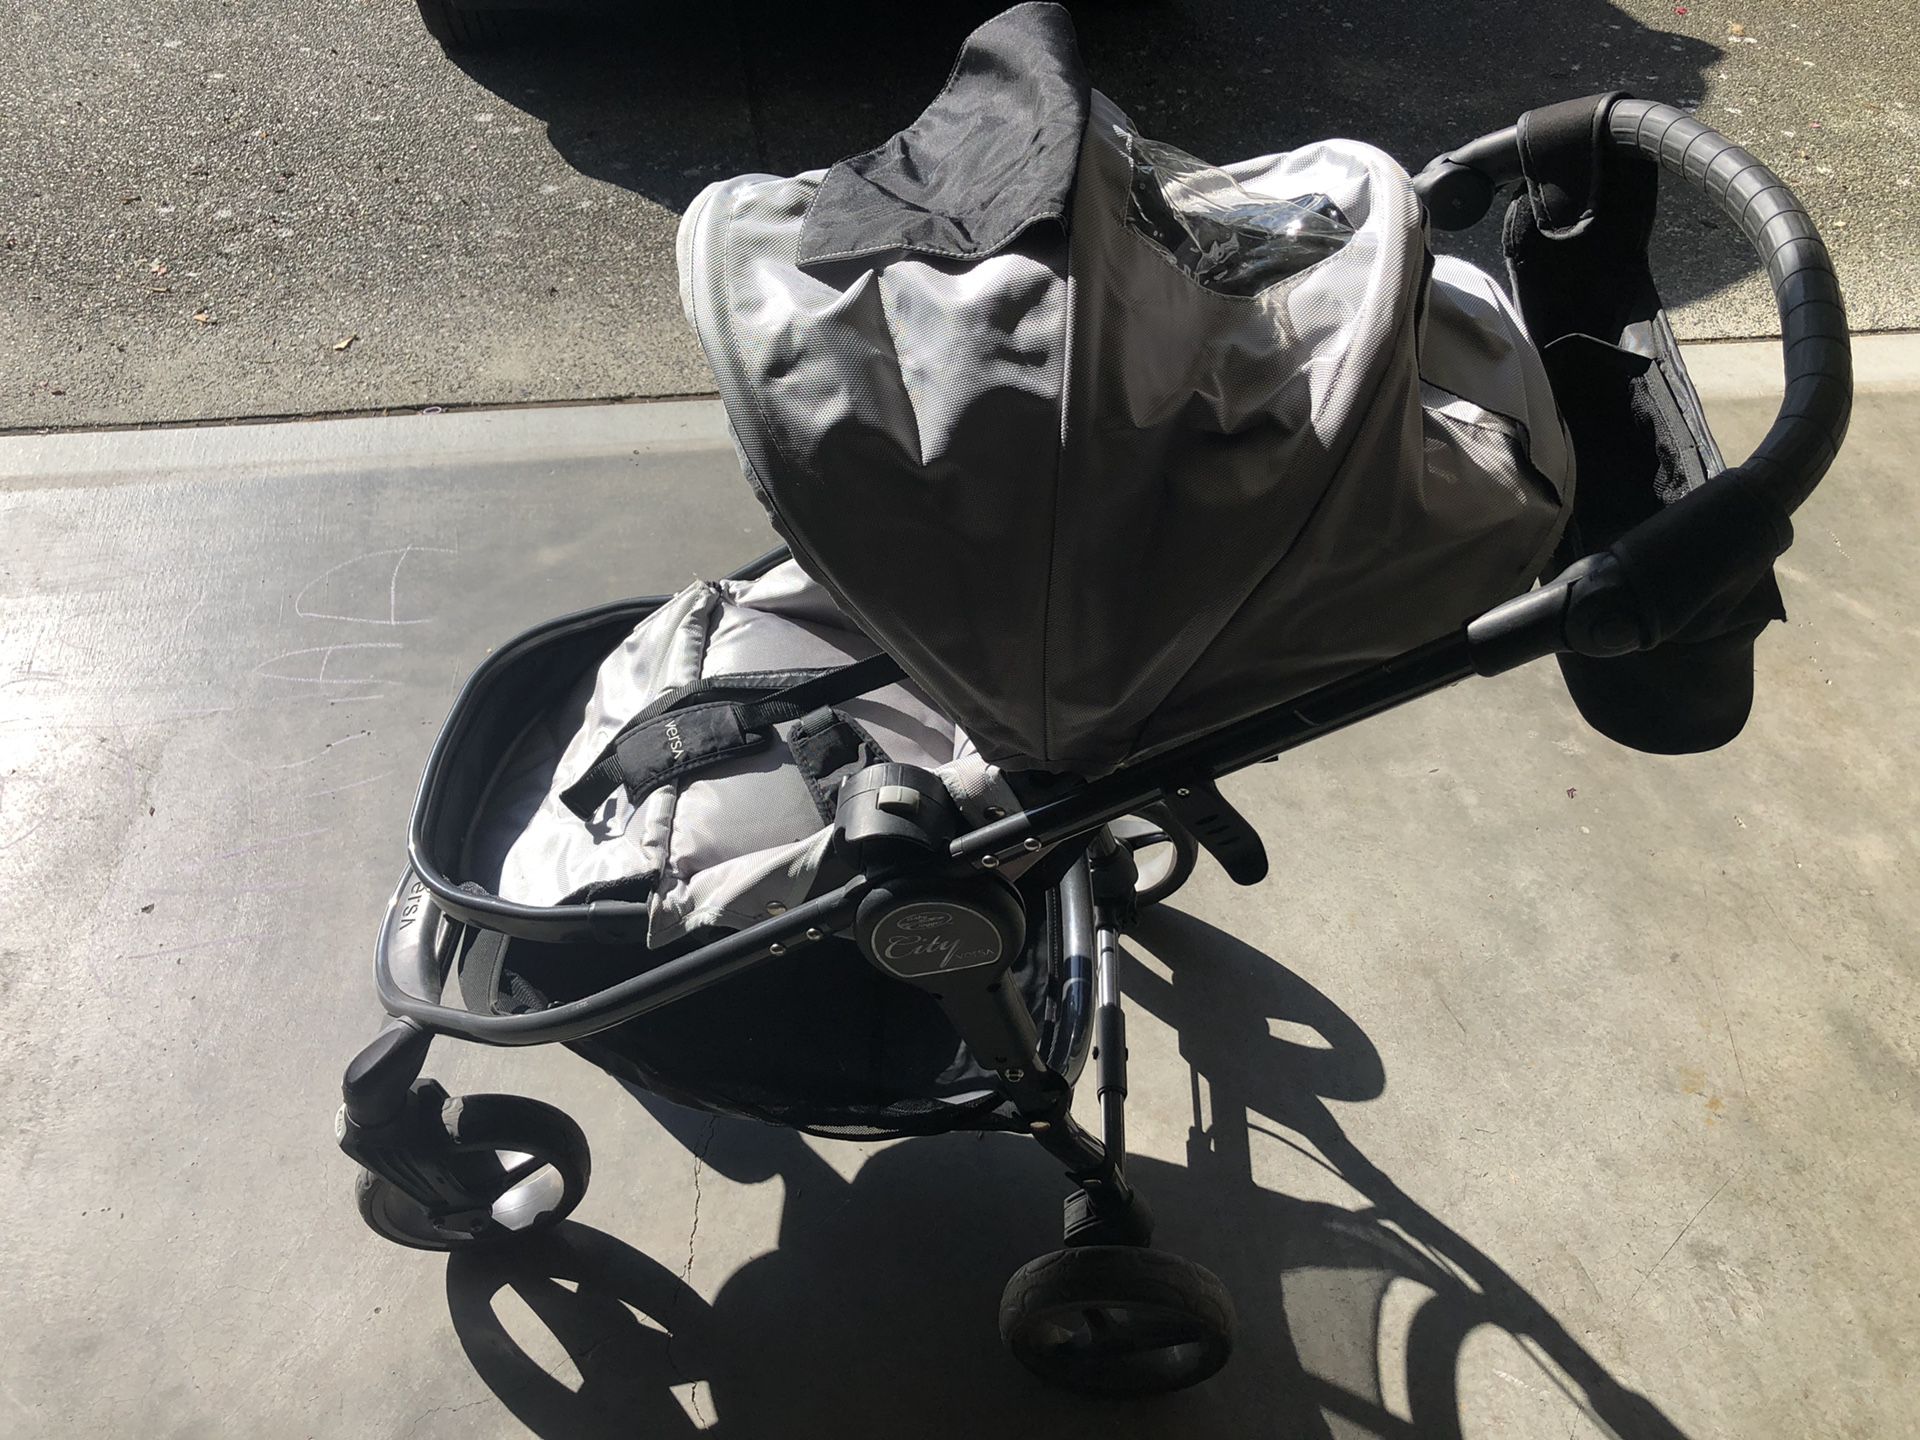 Baby Jogger city versa stroller.